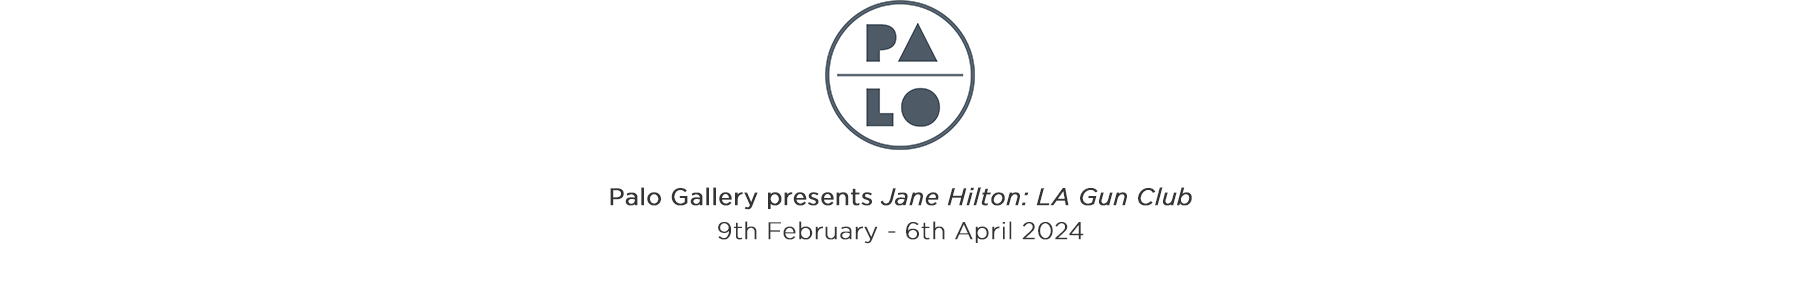 Palo Gallery presents Jane Hilton: LA Gun Club 9th February - 6th April 2024